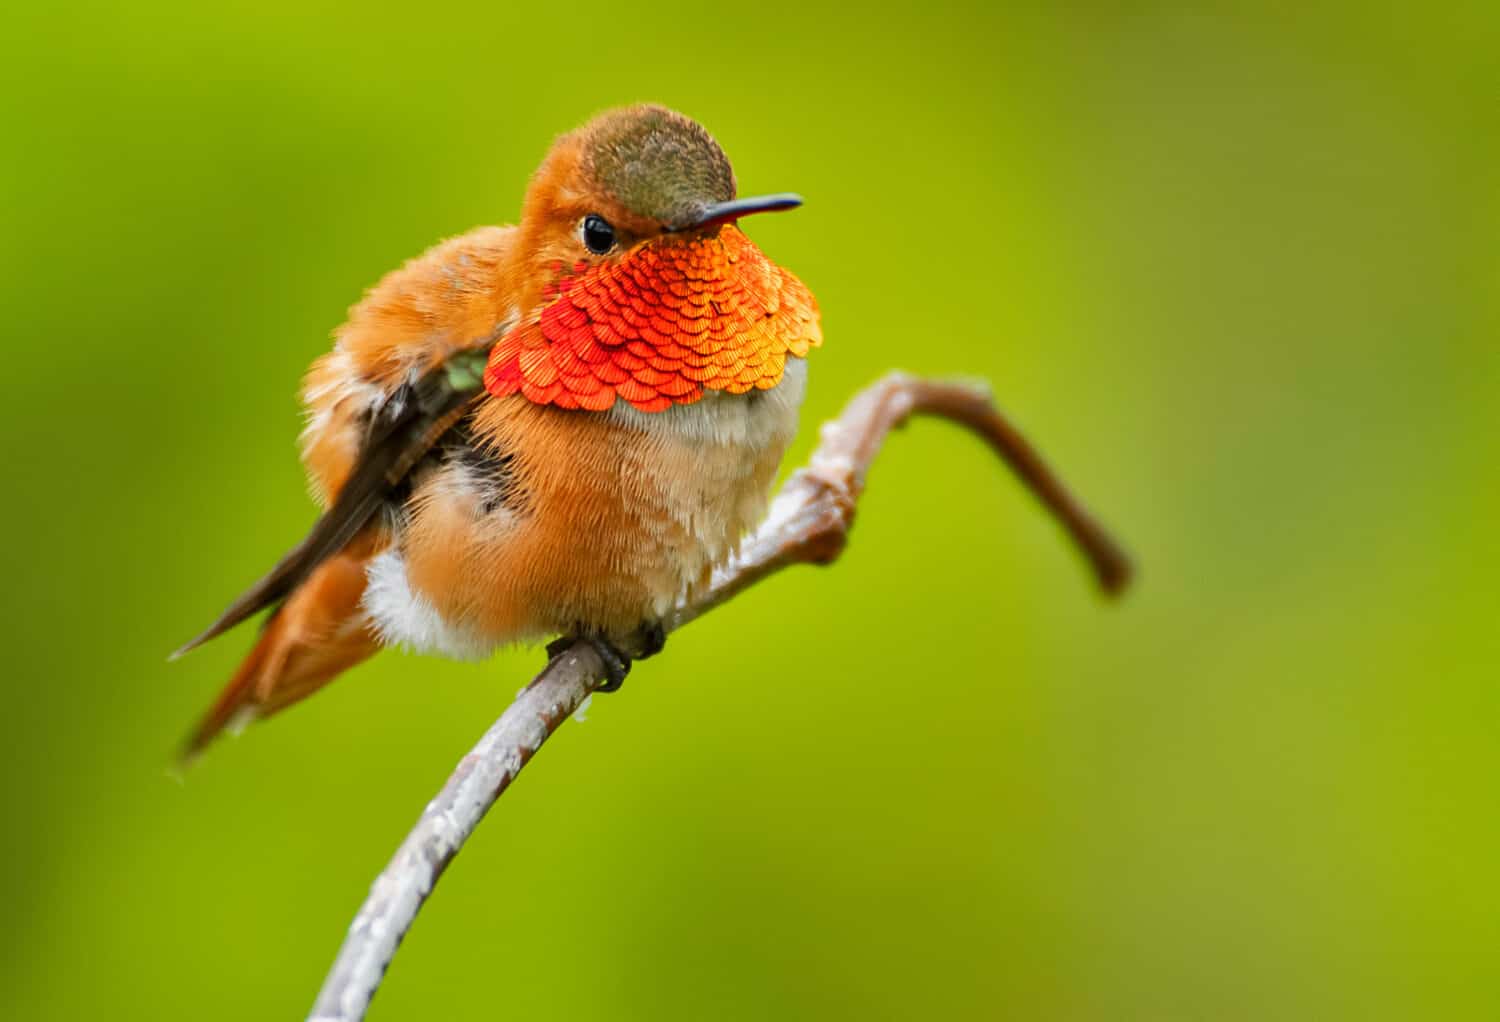 Rufous Hummingbird flaring it's gorget